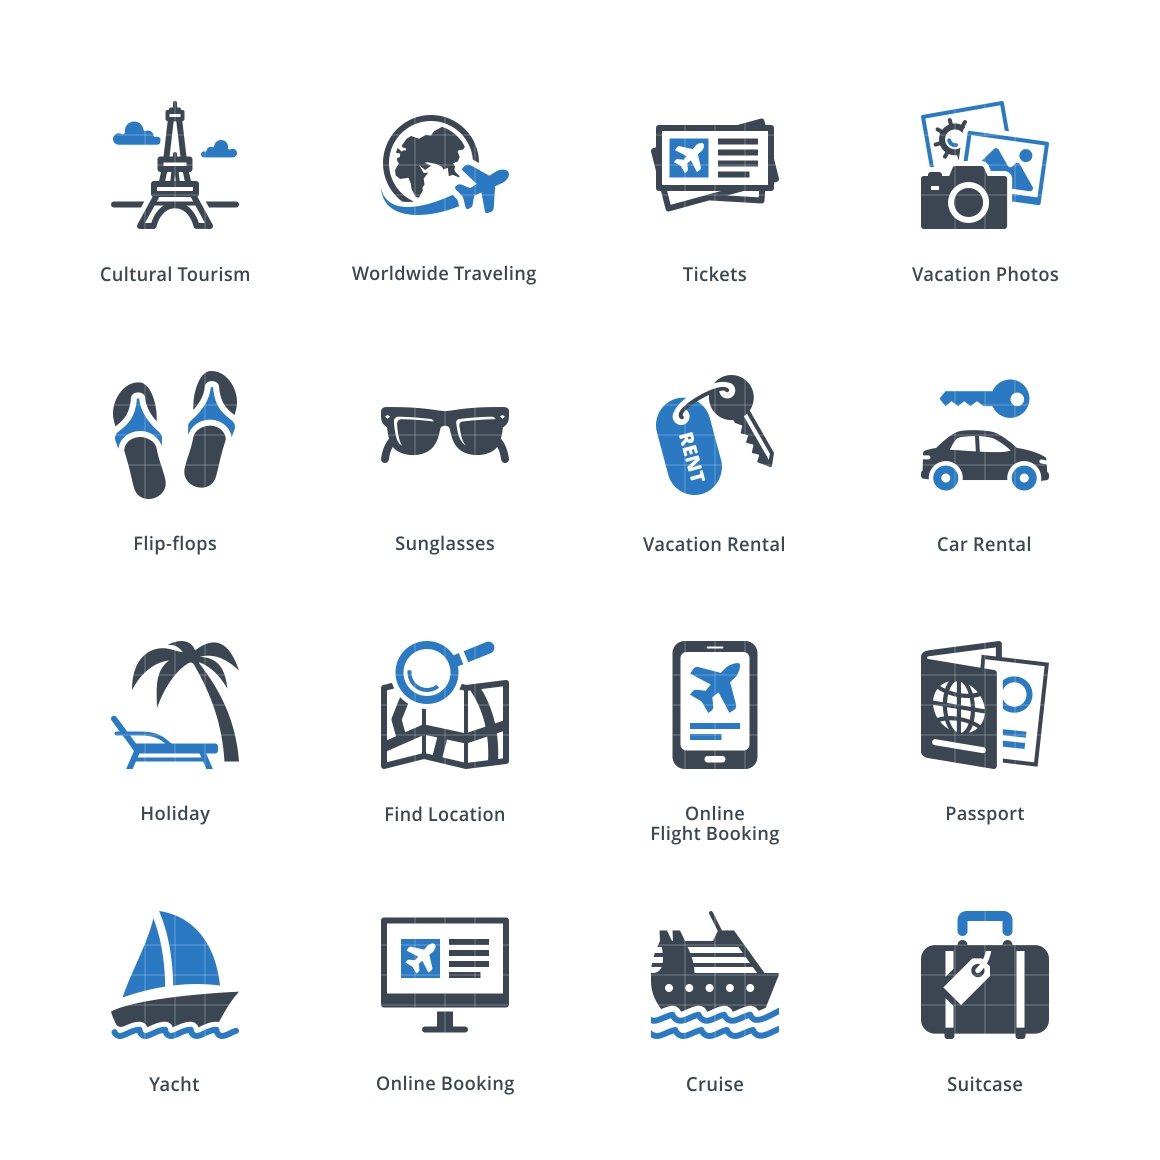 Tourism & Travel Icons Set 5 | Blue preview image.